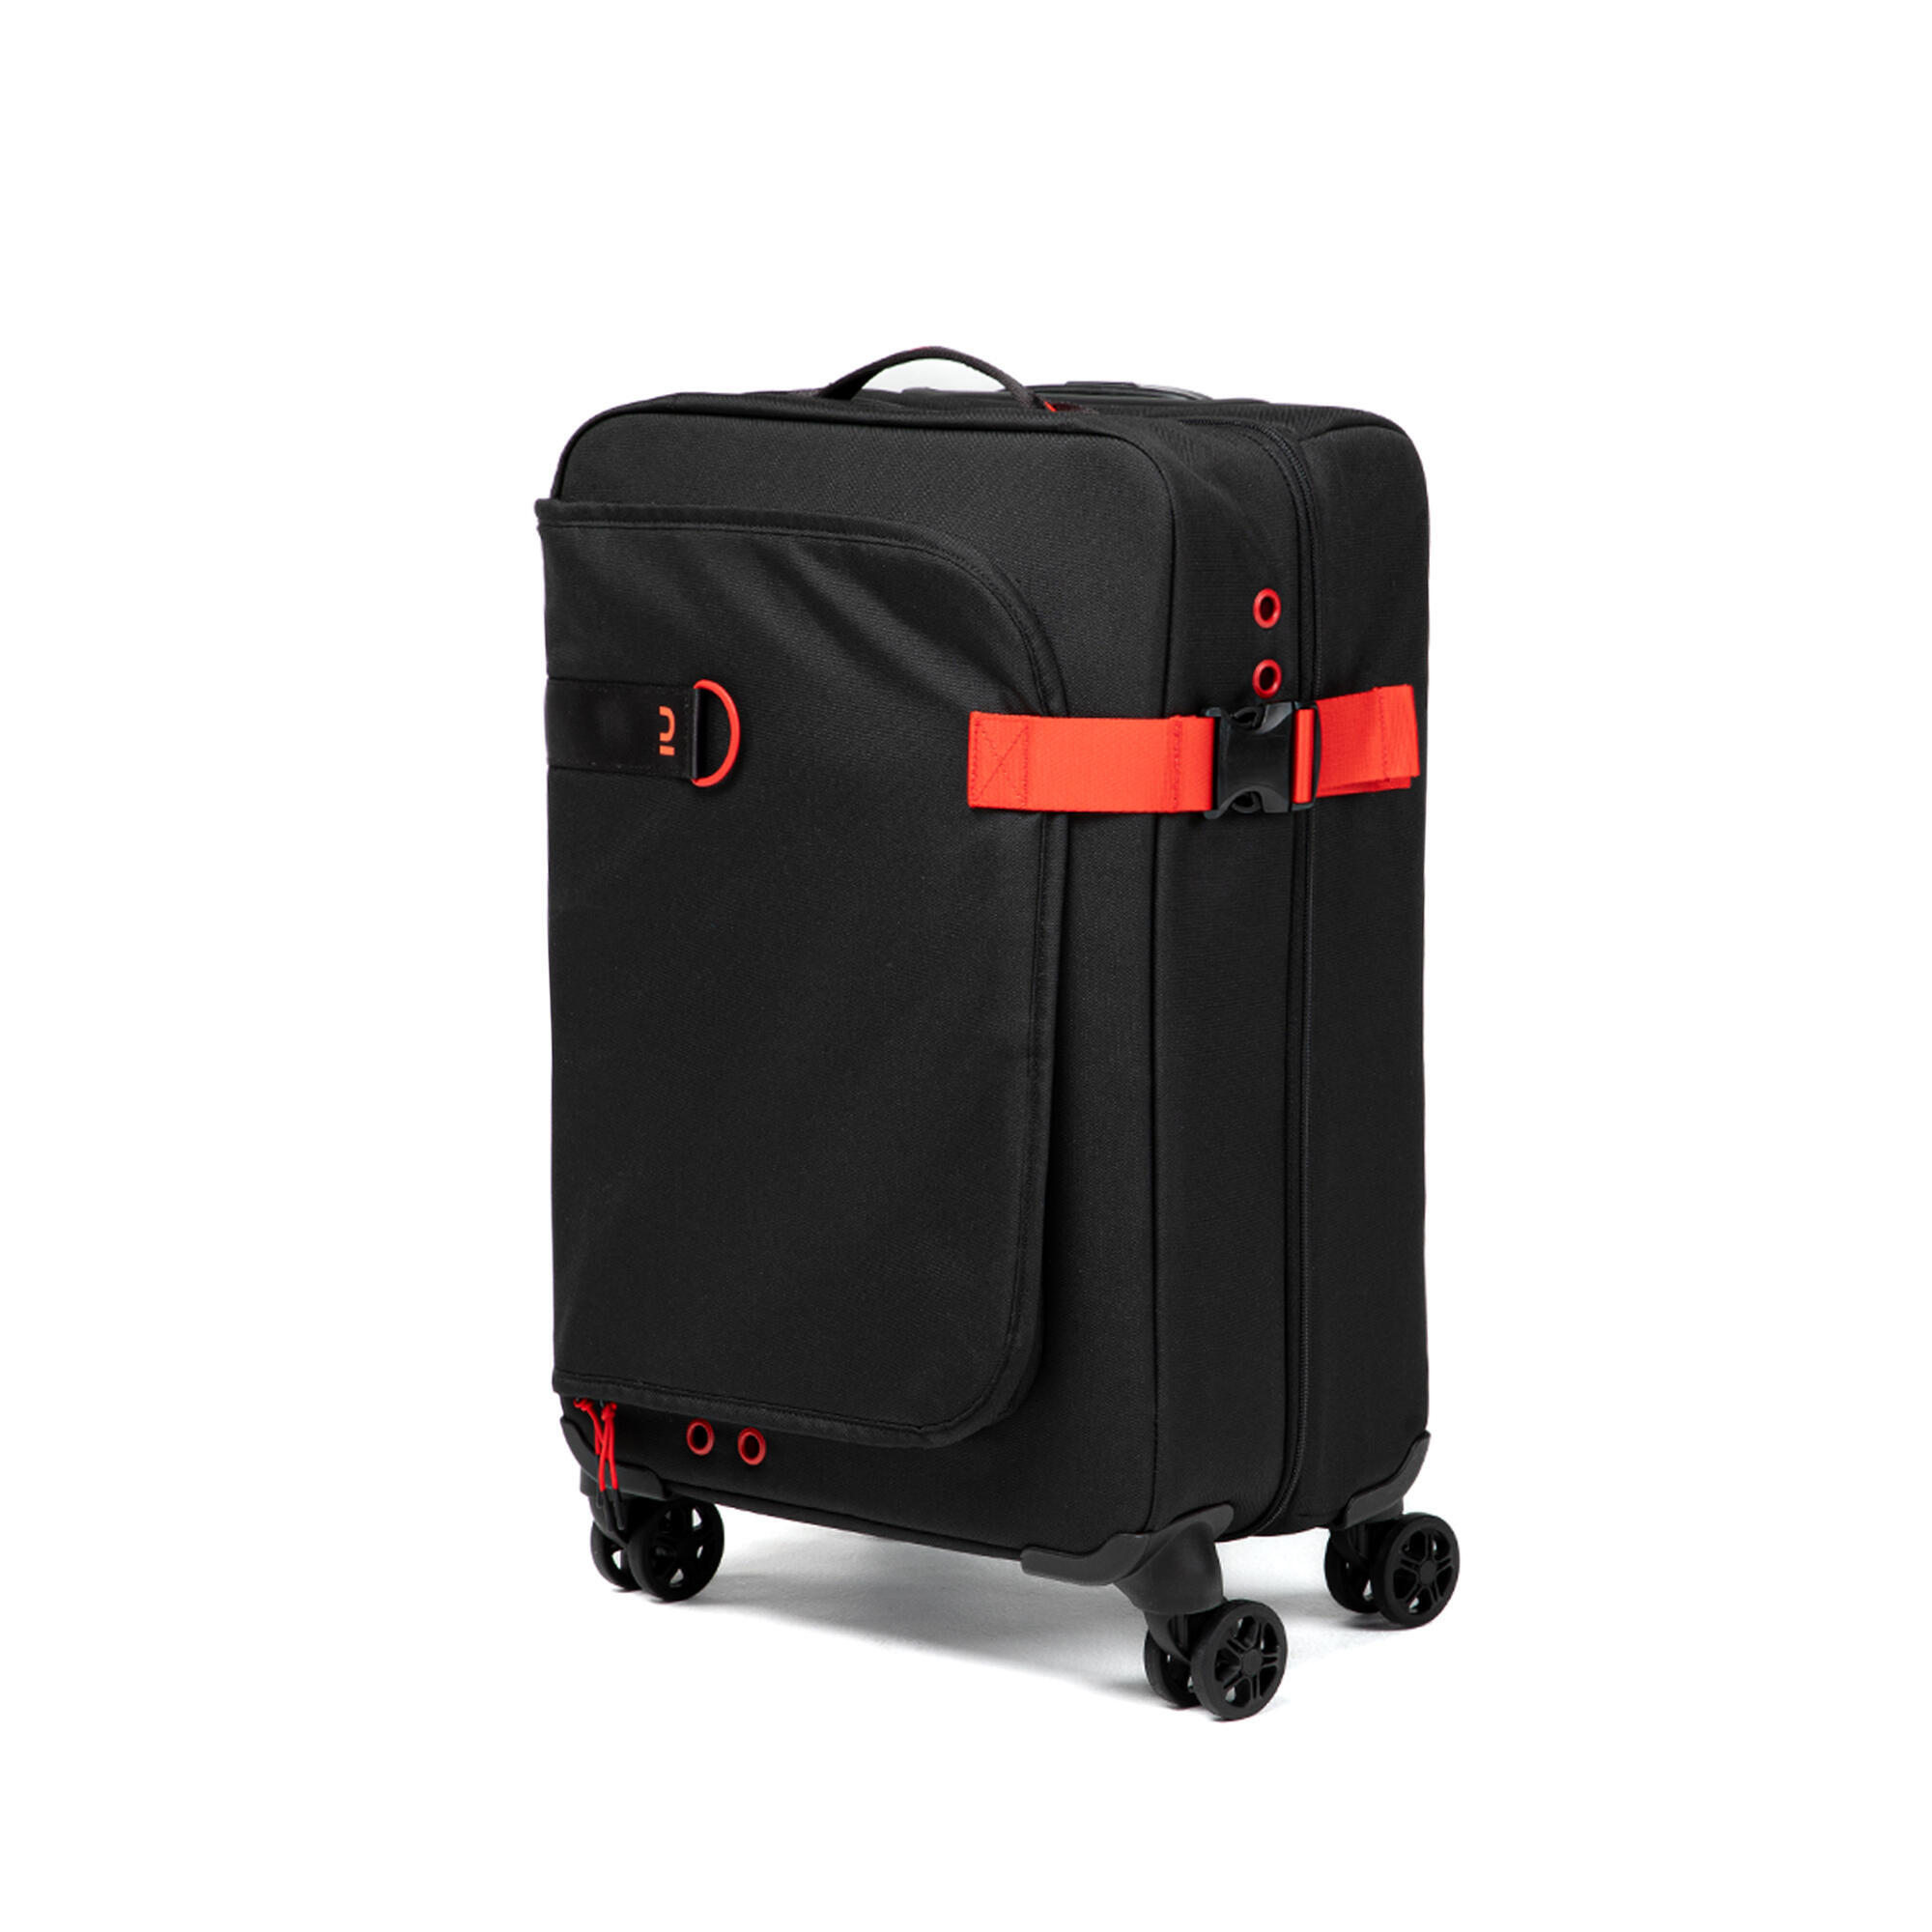 30 L 4-Wheel Suitcase Urban - Black 5/12